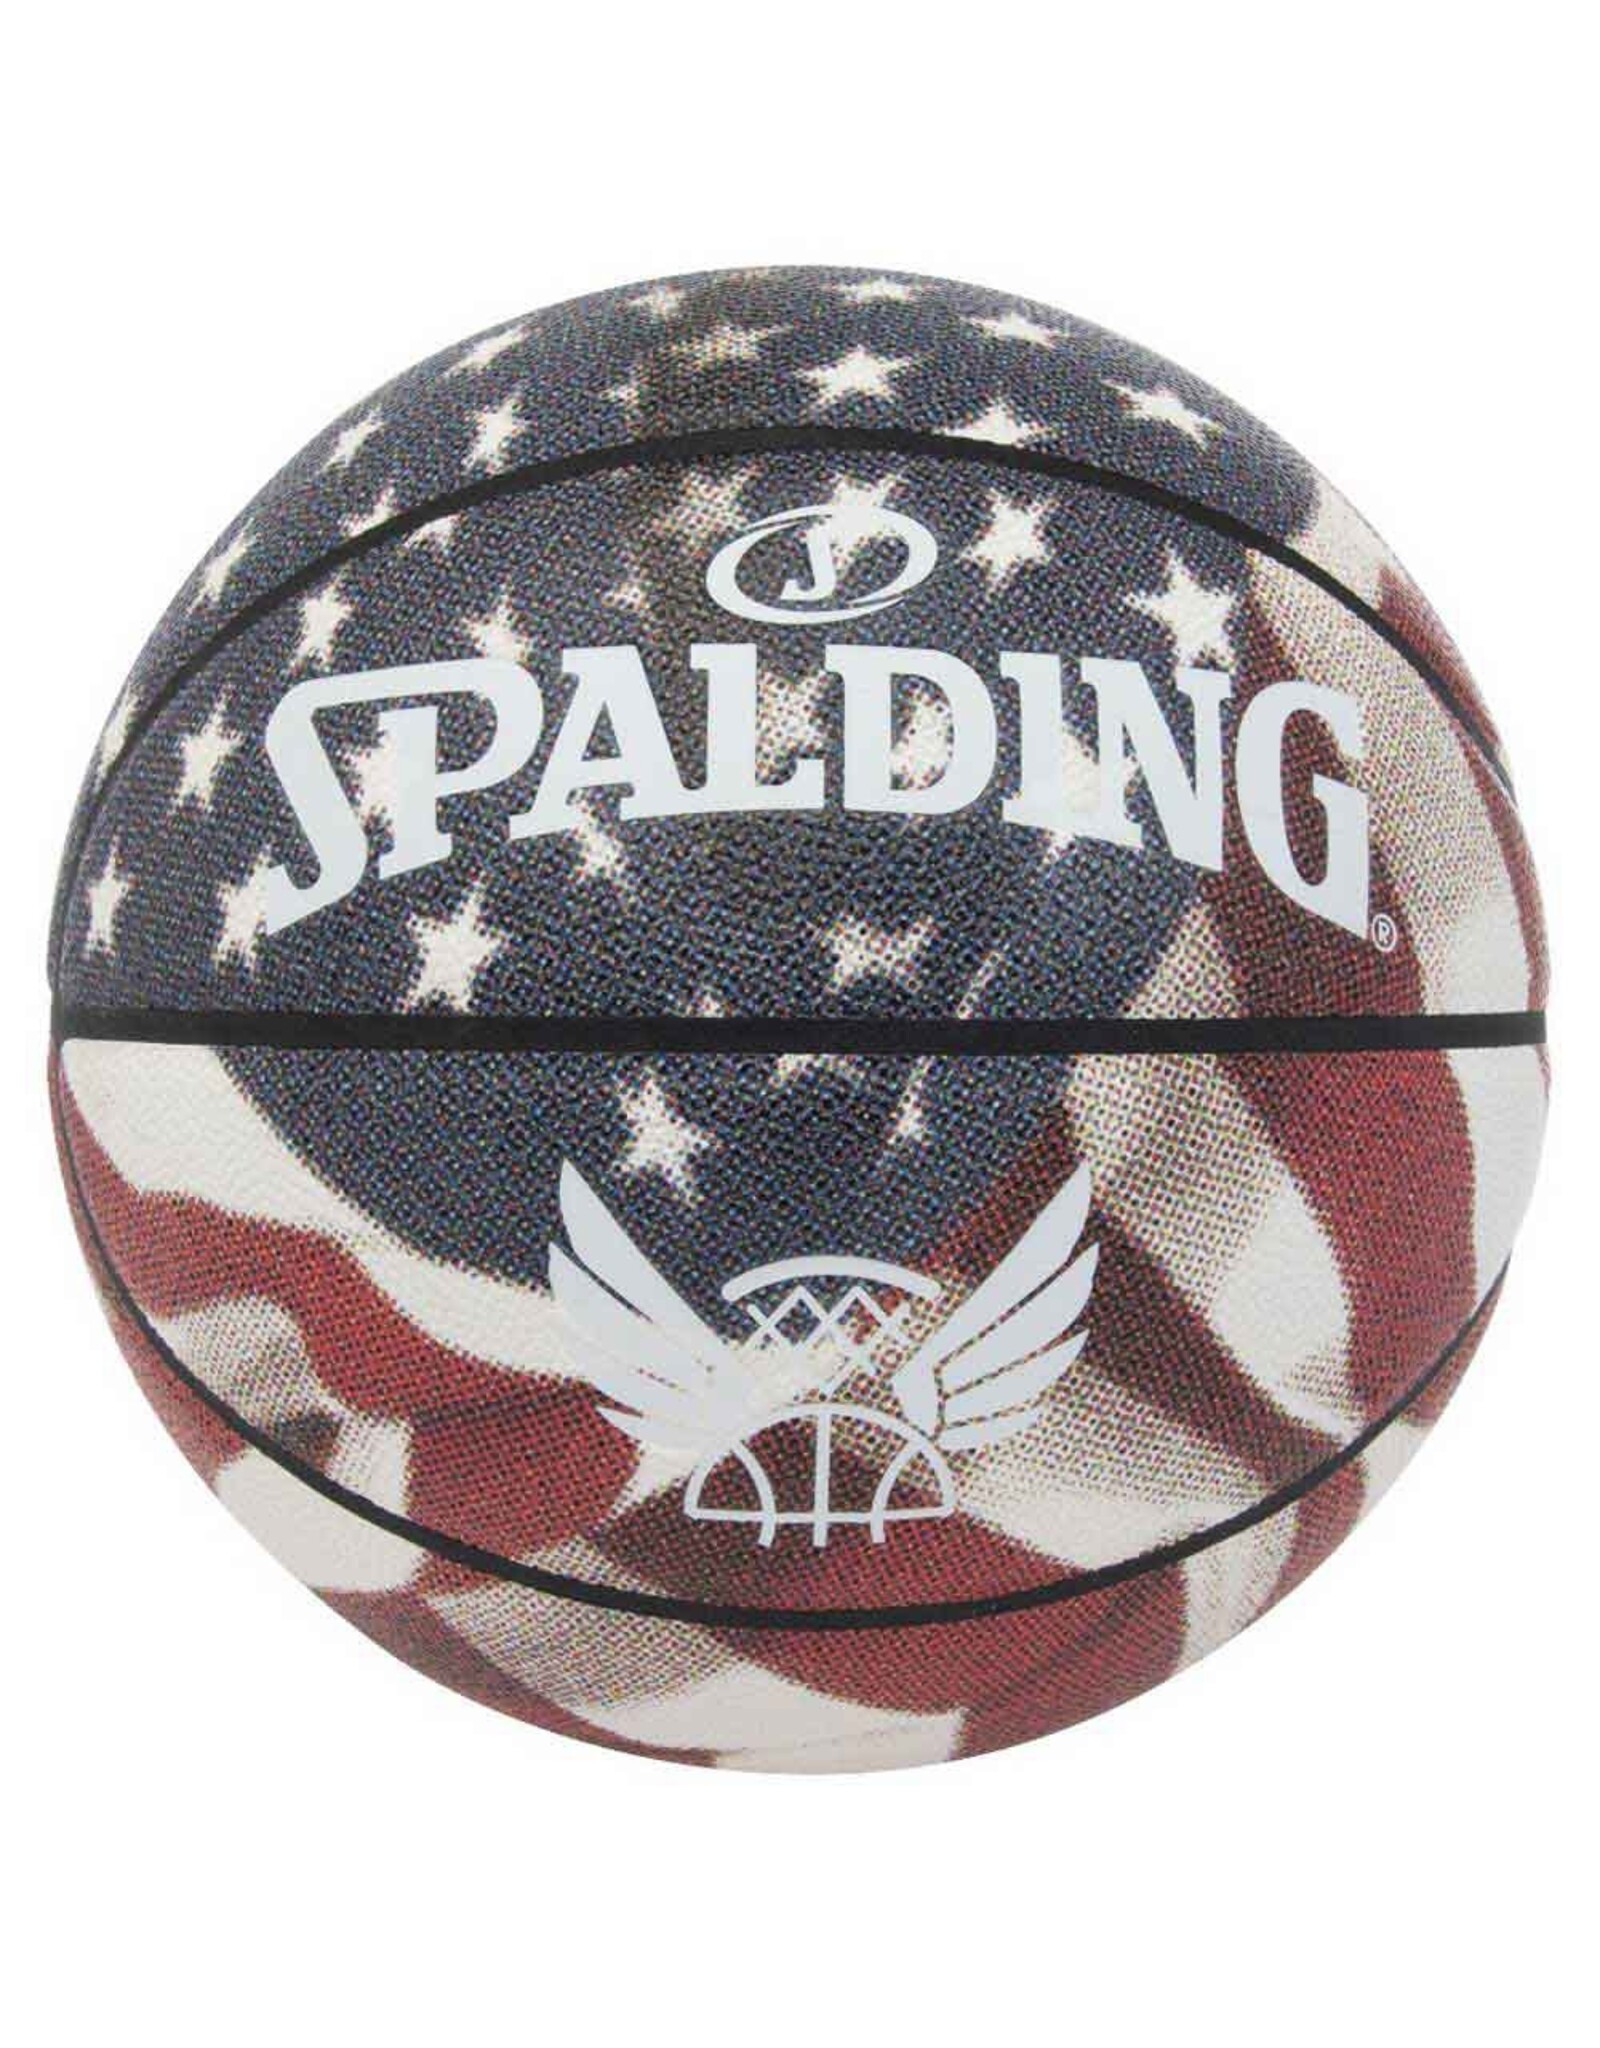 Spalding Trend Stars Stripes Sz7 Rubber Basketball